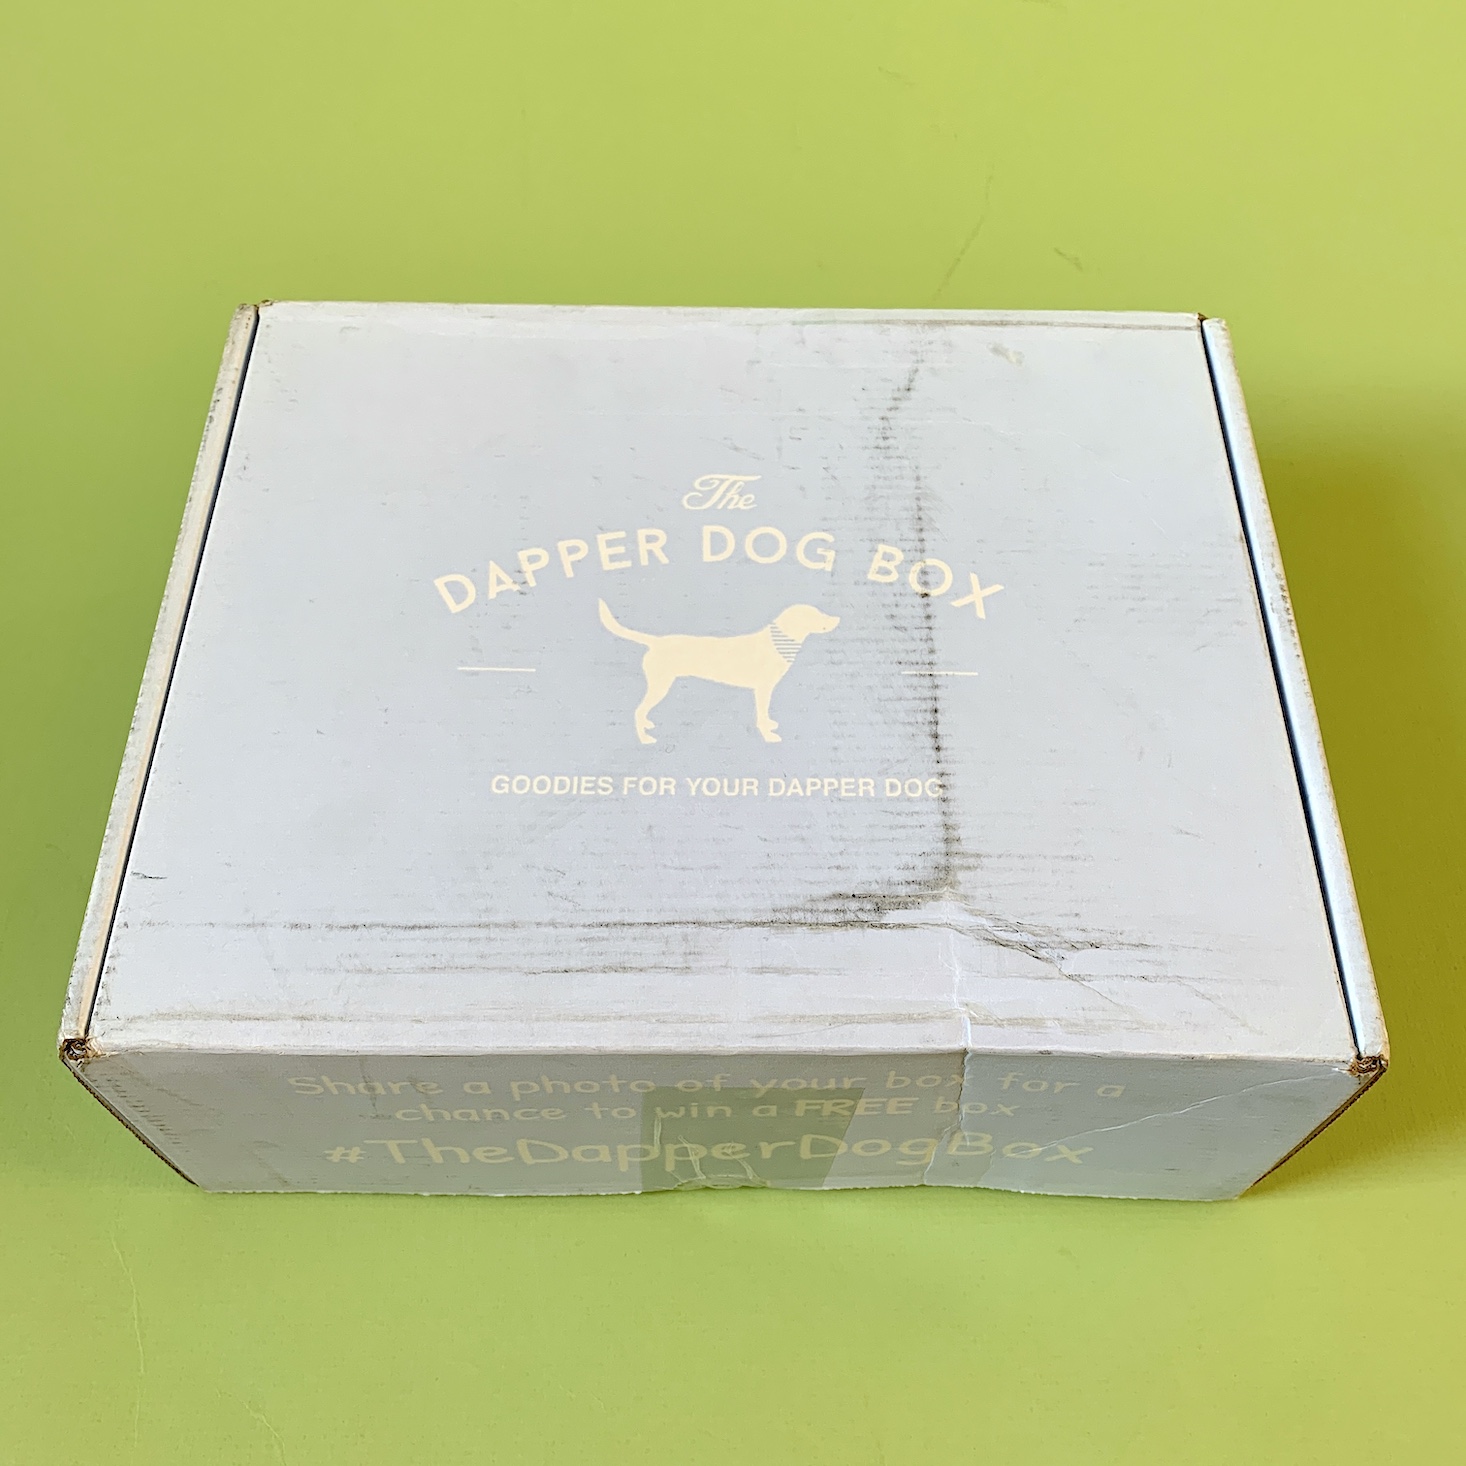 The Dapper Dog Box Review – April 2021